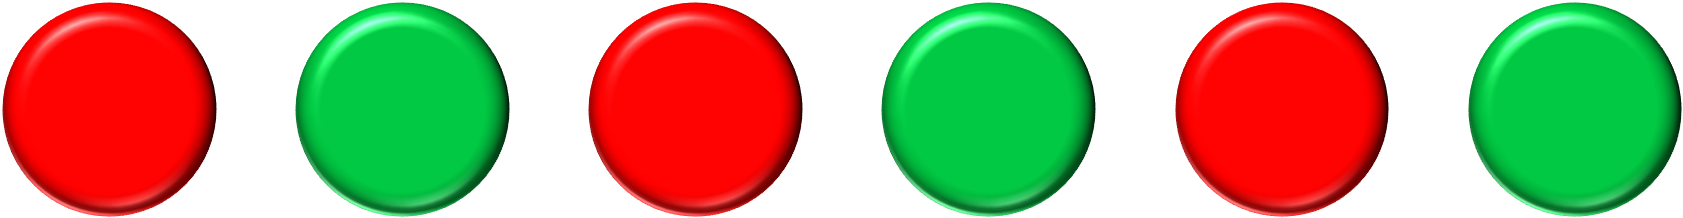 Https - //mikeclayton - Files - Wordpress - - Red Button Green Button (1683x218)